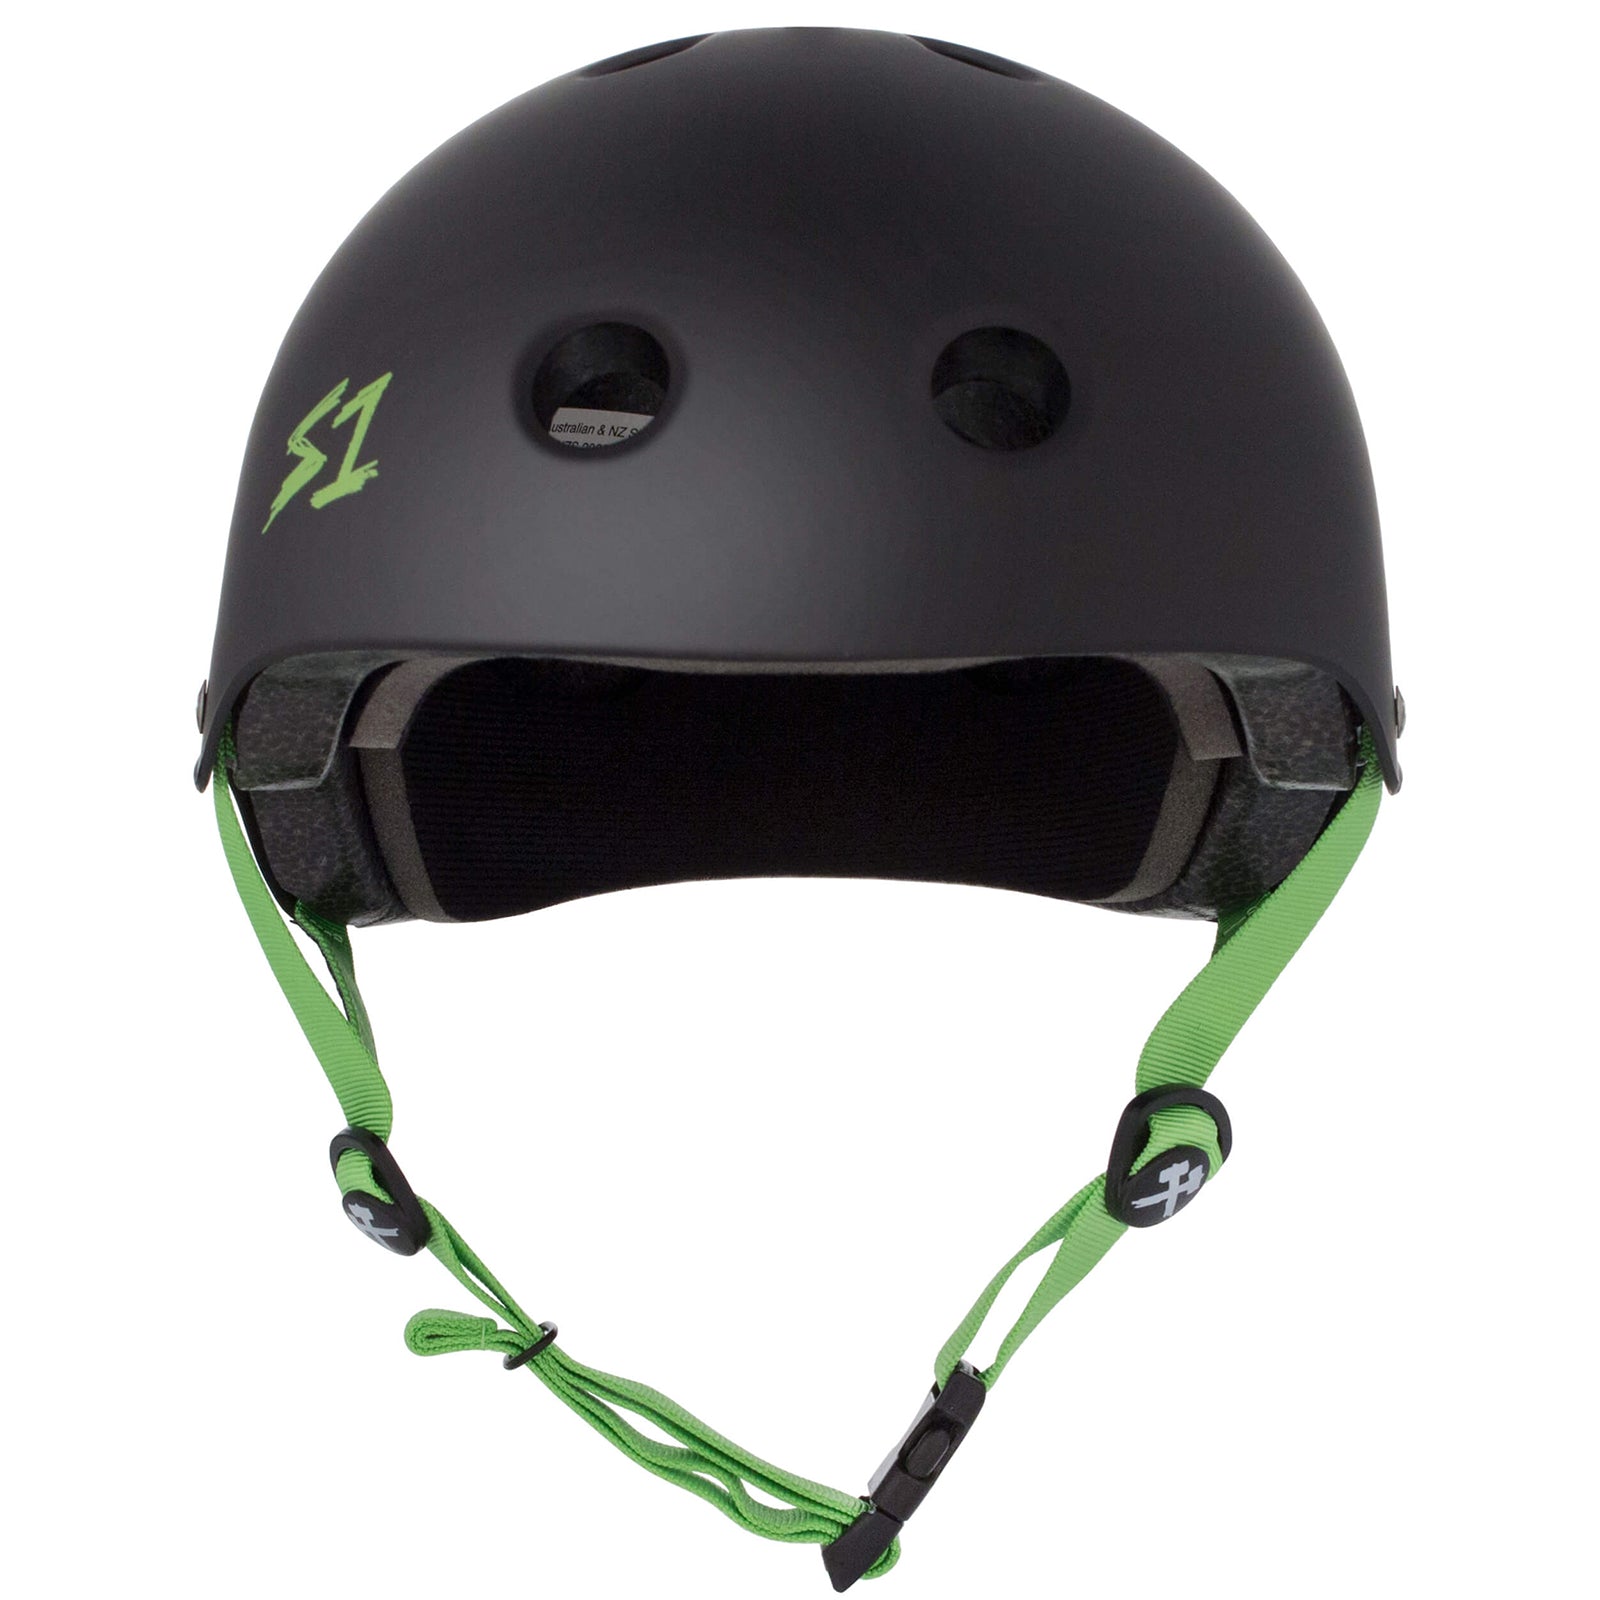 S1 Lifer Helmet - Mast black helmet with green straps